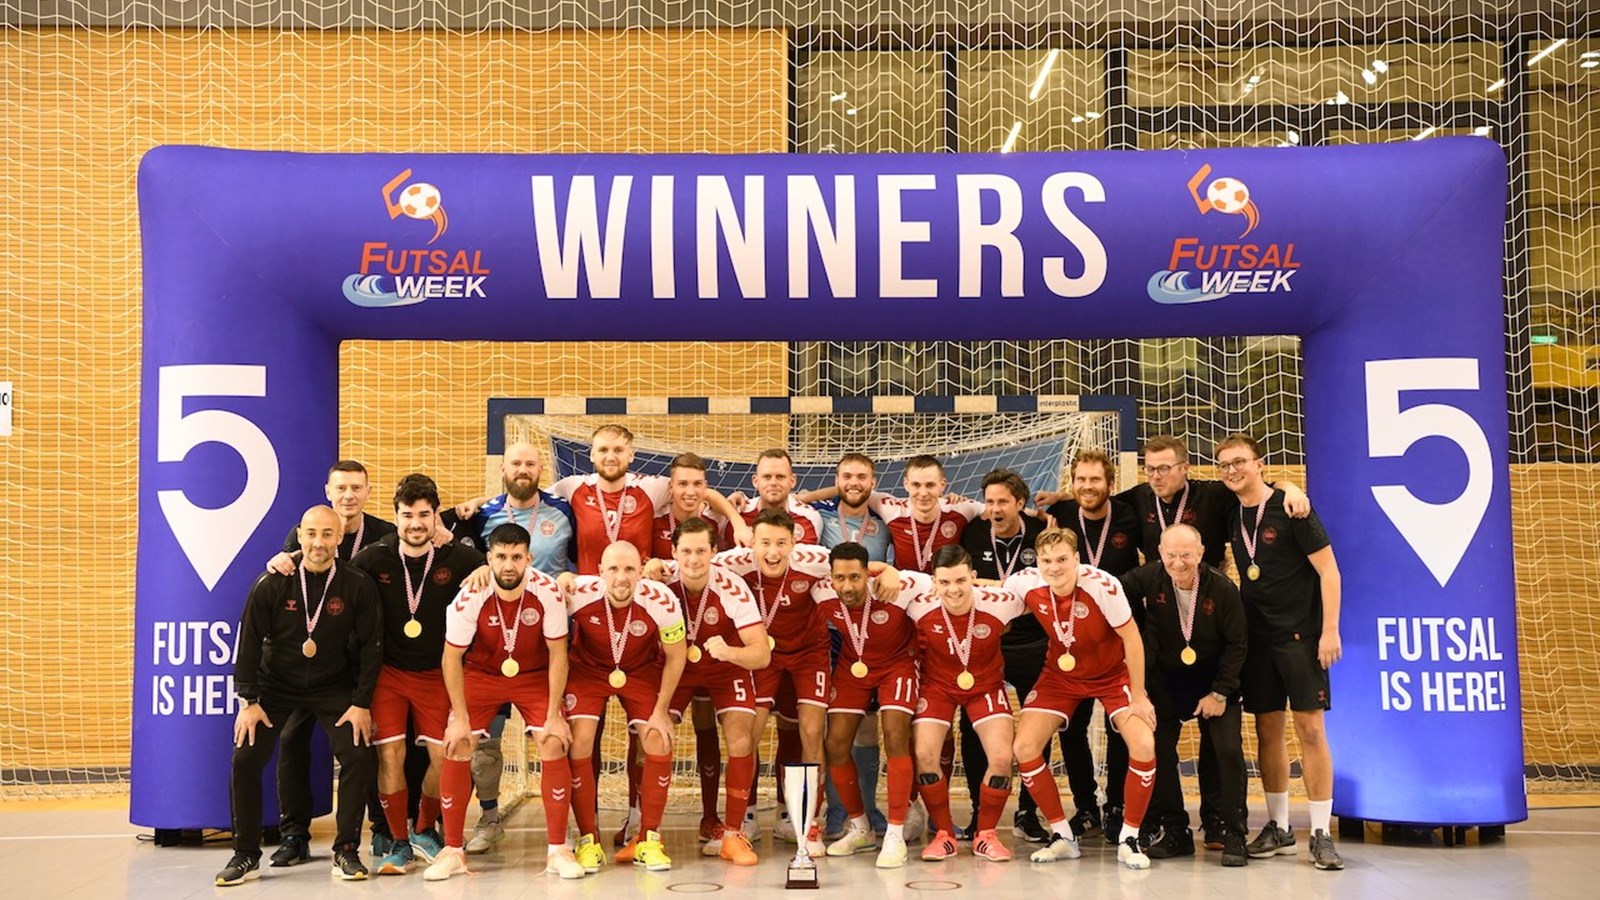 Futsallandsholdet vinder guld igen